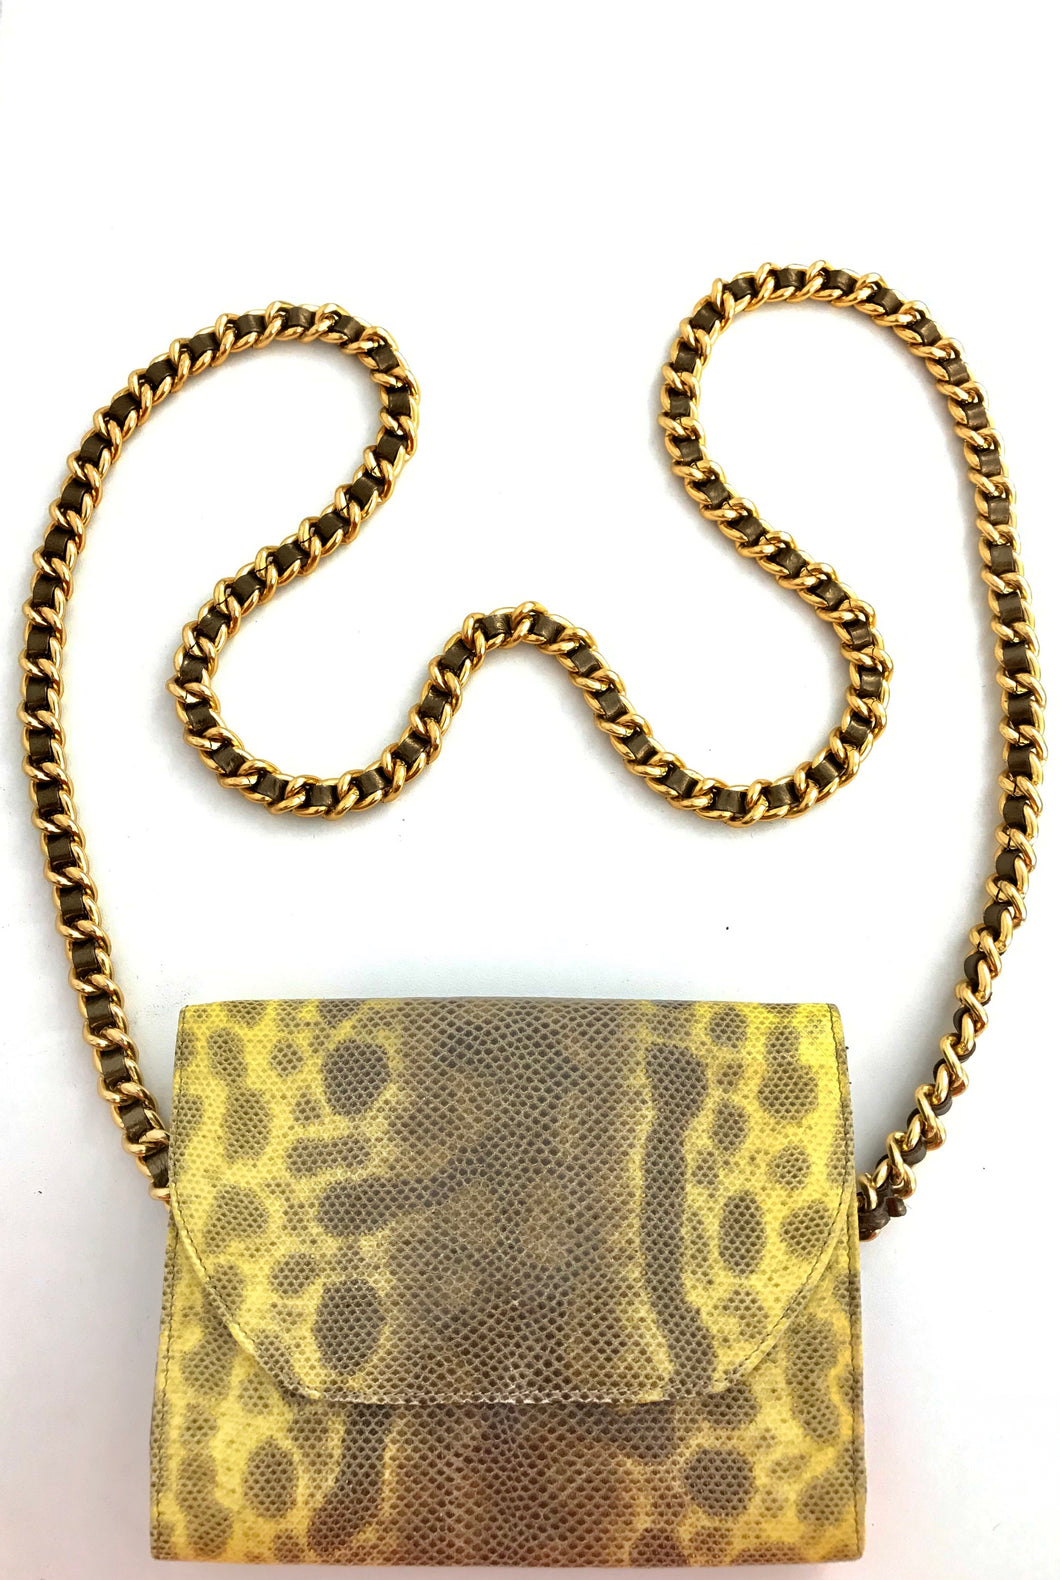 1980's Yellow Snake Print Leather Mini Purse by Arlene LaMarca